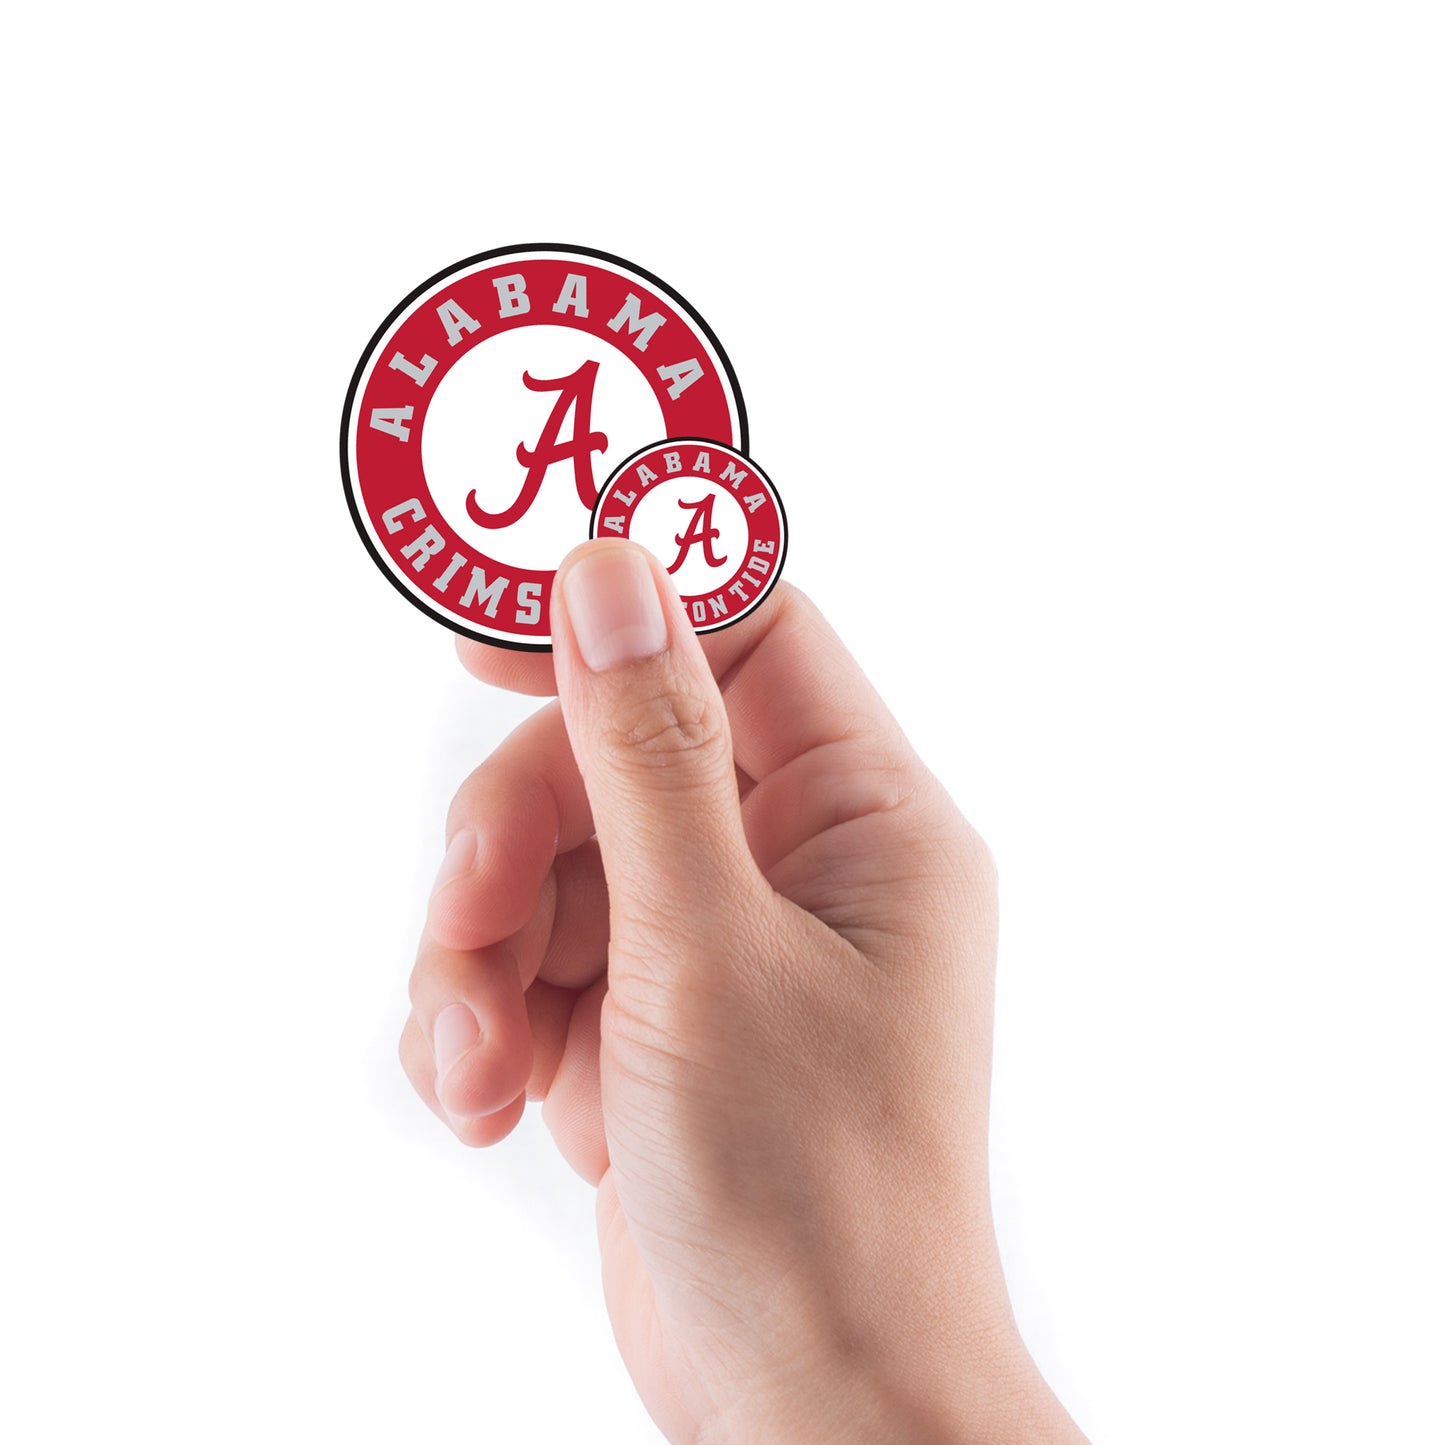 Sheet of 5 -U of Alabama: Alabama Crimson Tide 2021 Logo Minis        - Officially Licensed NCAA Removable    Adhesive Decal